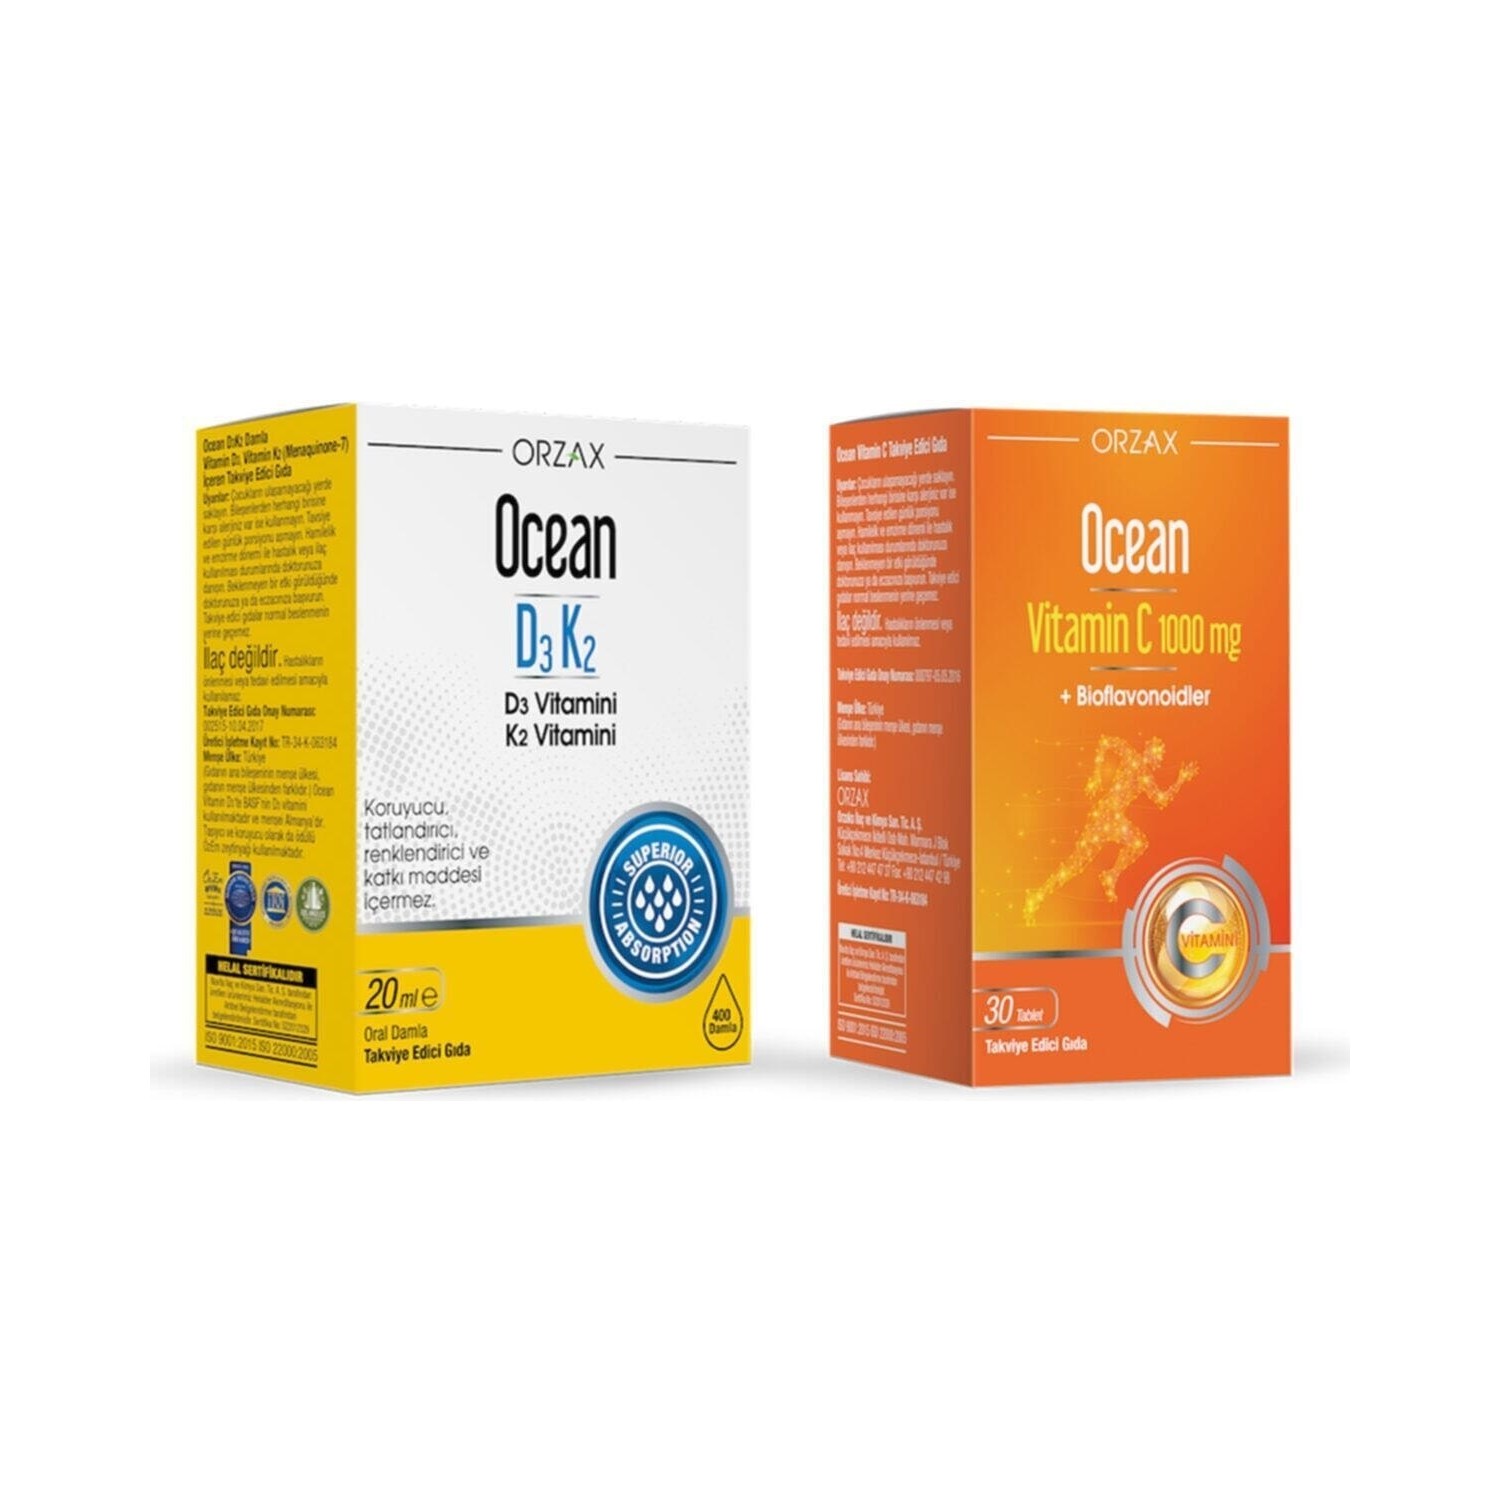 Пищевая добавка Ocean D3 / K2, 20 мл + Витамин C Ocean 1000 мг, 30 таблеток витамин c 30 таблеток и витамин d3 k2 в каплях ocean 20 мл